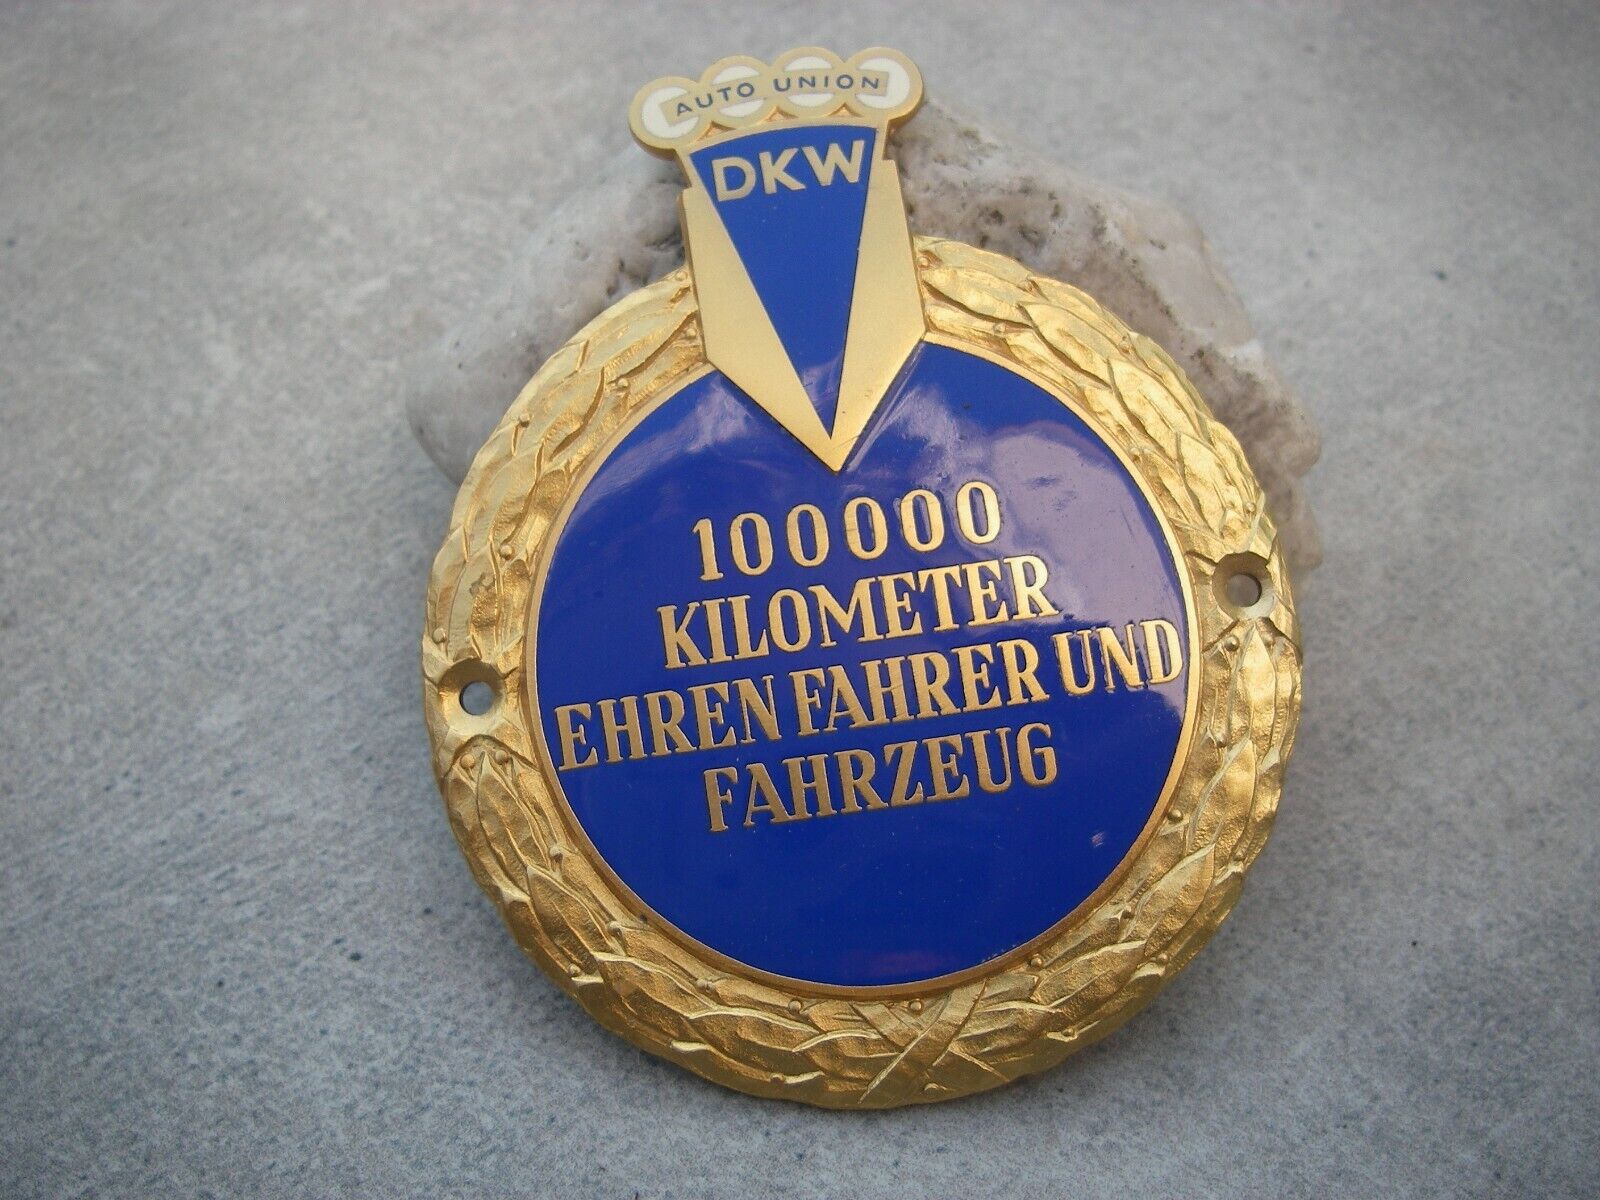 rare AUTO UNION DKW - 100.000 KILOMETERS MILEAGE Badge - honoring driver and car